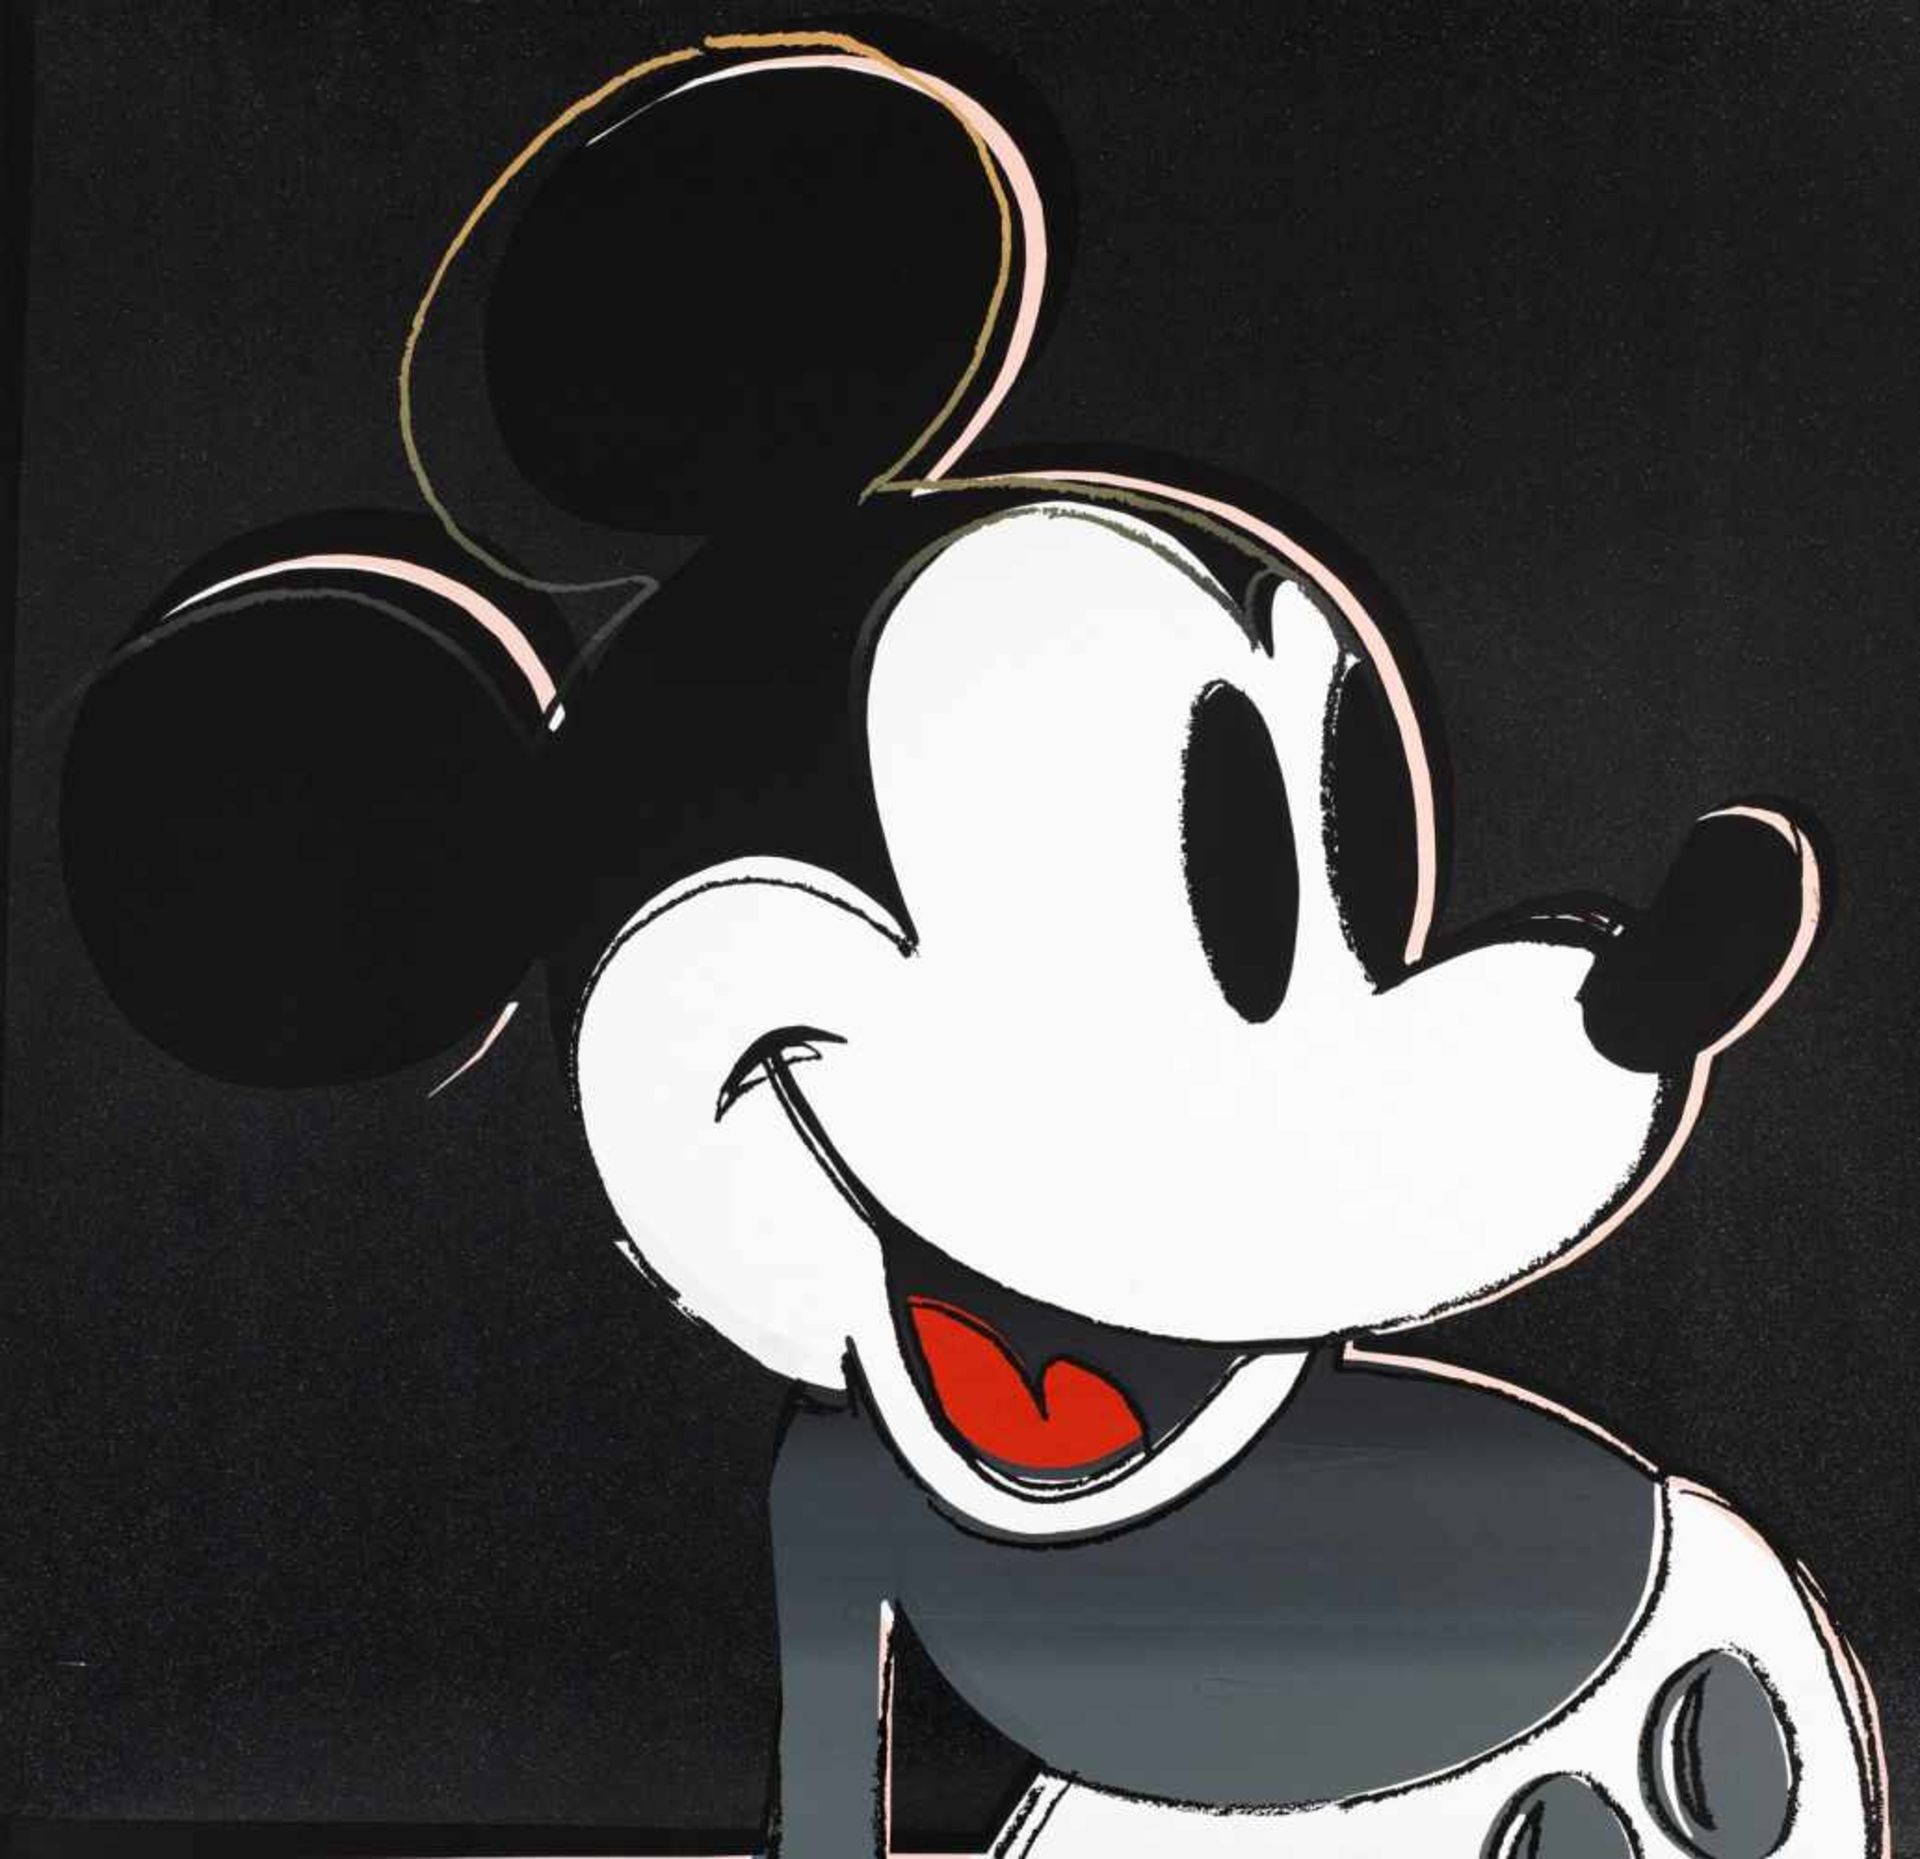 Andy Warhol(1928 Pittsburgh - 1987 New York)"Mickey Mouse" aus dem Portfolio "Myths".